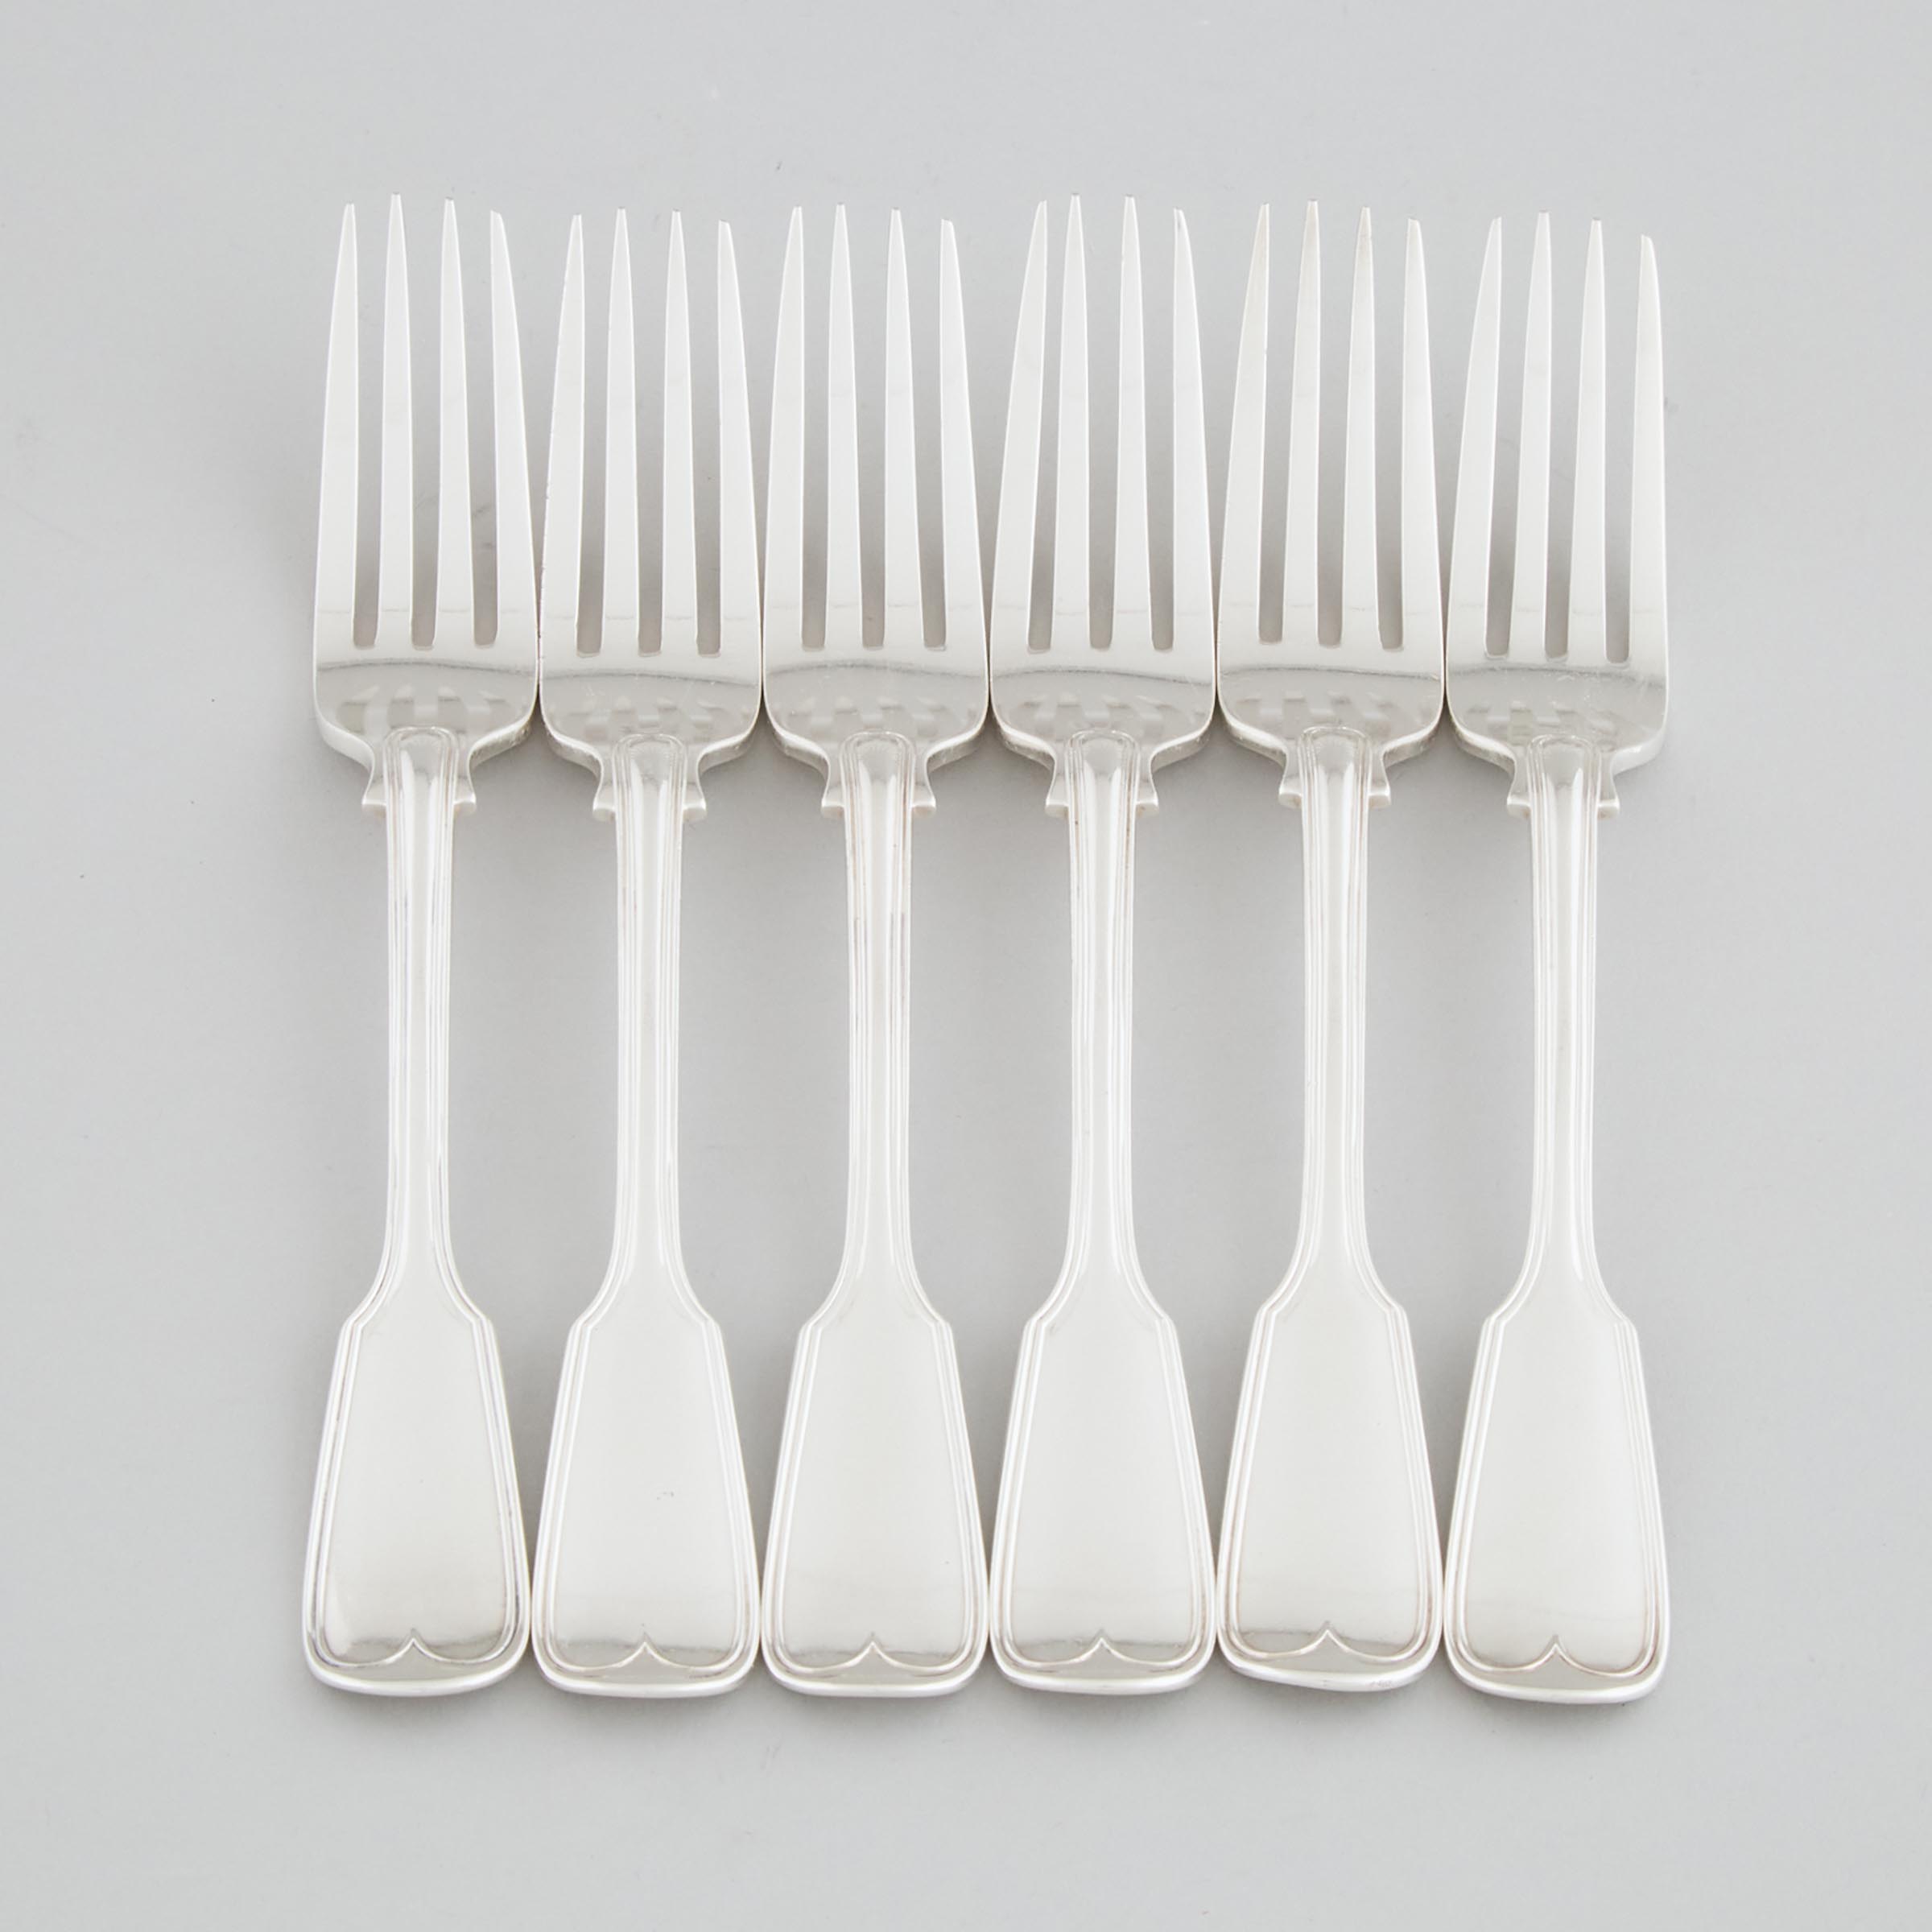 Six Victorian Silver Fiddle & Thread Pattern Table Forks, George Adams, London, 1863